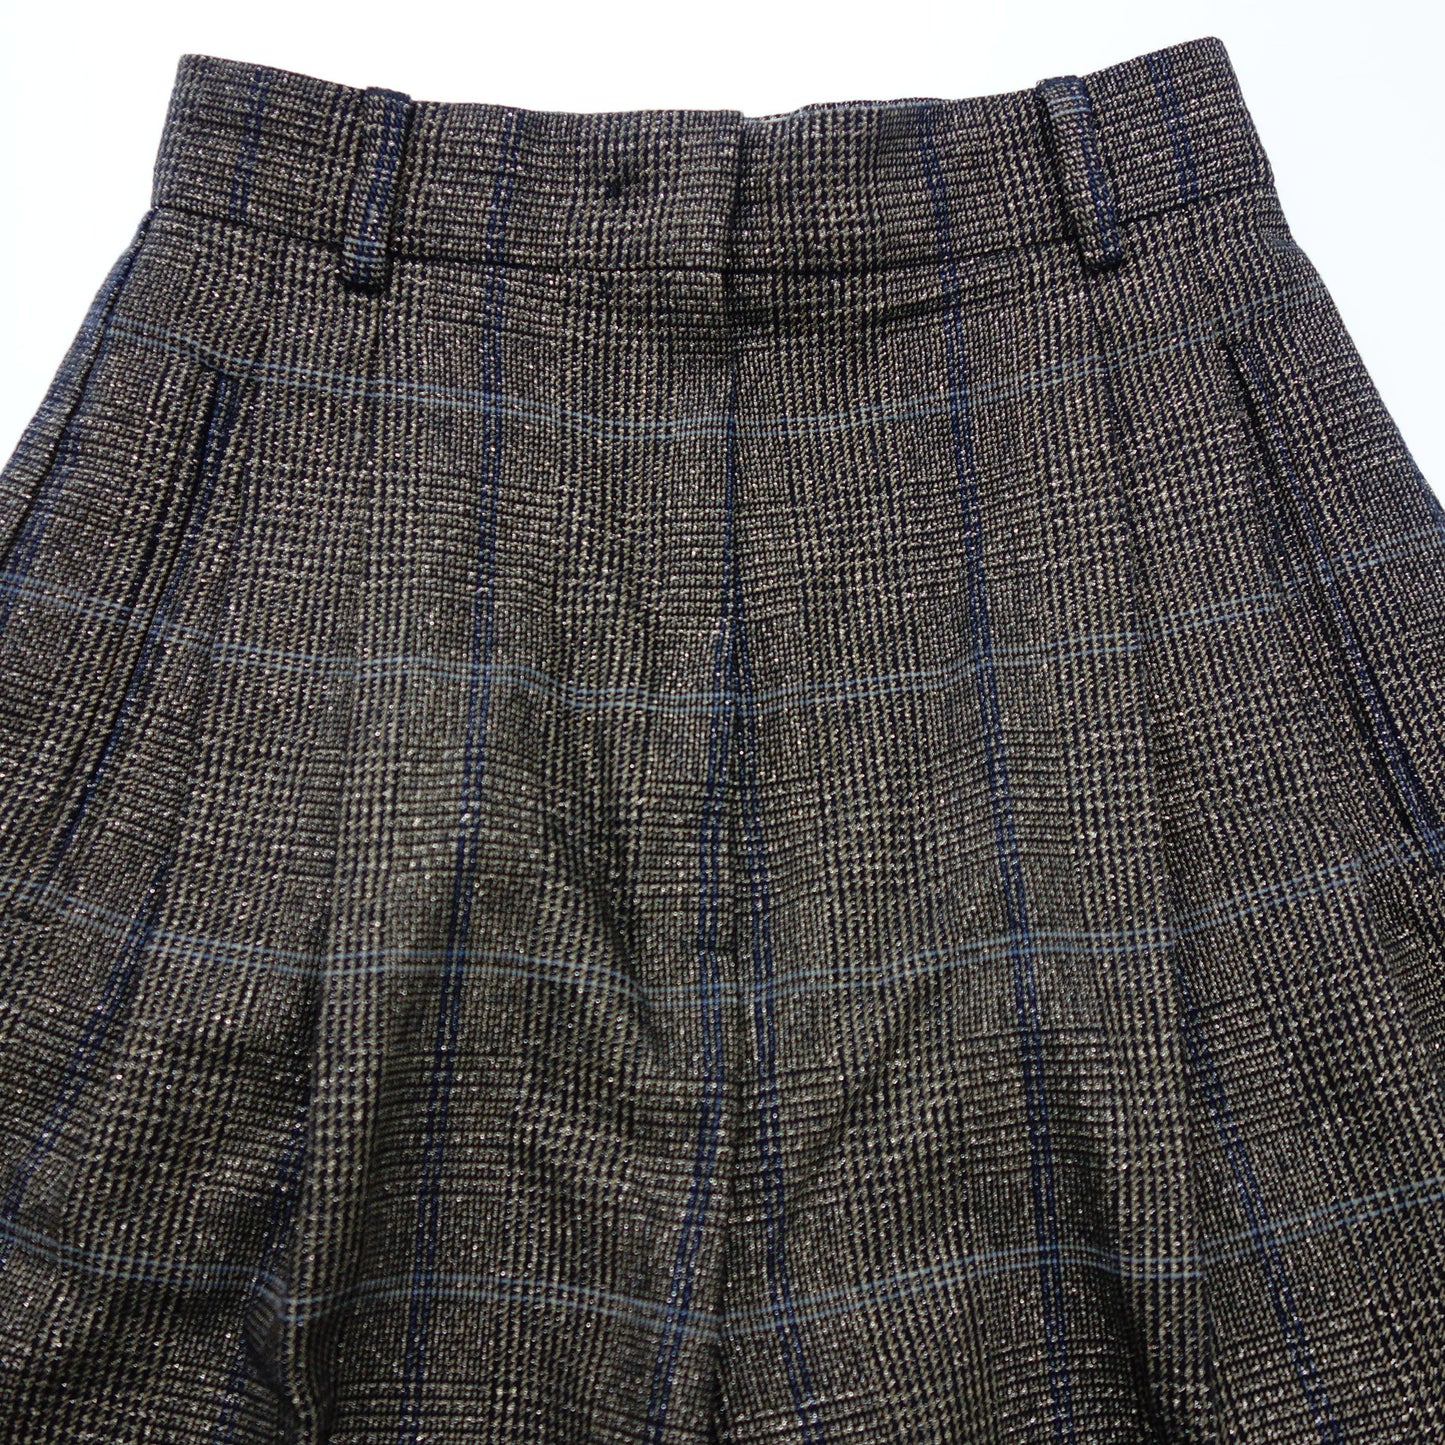 MaxMara Studio Slacks Pants Wool Check Women's Multicolor 34 MaxMara [AFB45] [Used] 